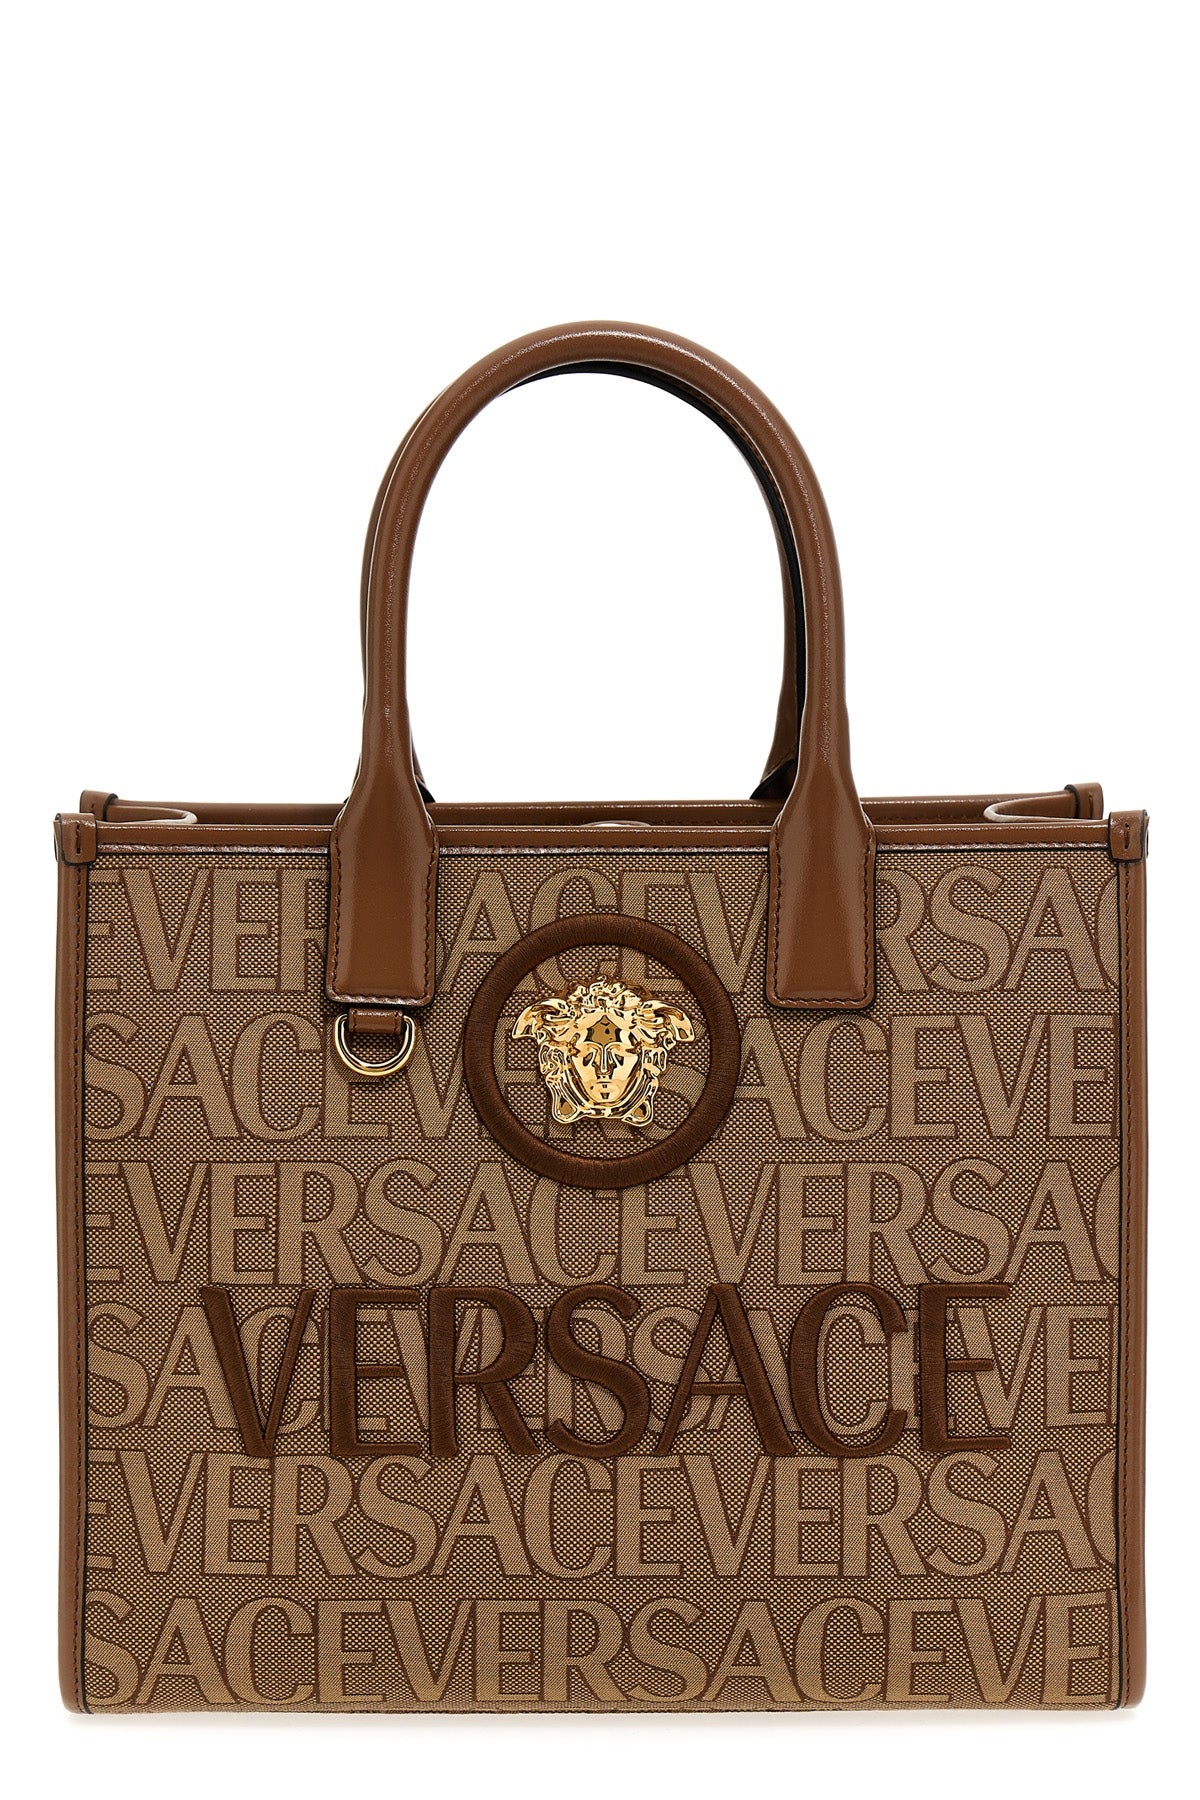 VERSACE LA VACANZA 'VERSACE ALLOVER' SMALL CAPSULE SHOPPING BAG